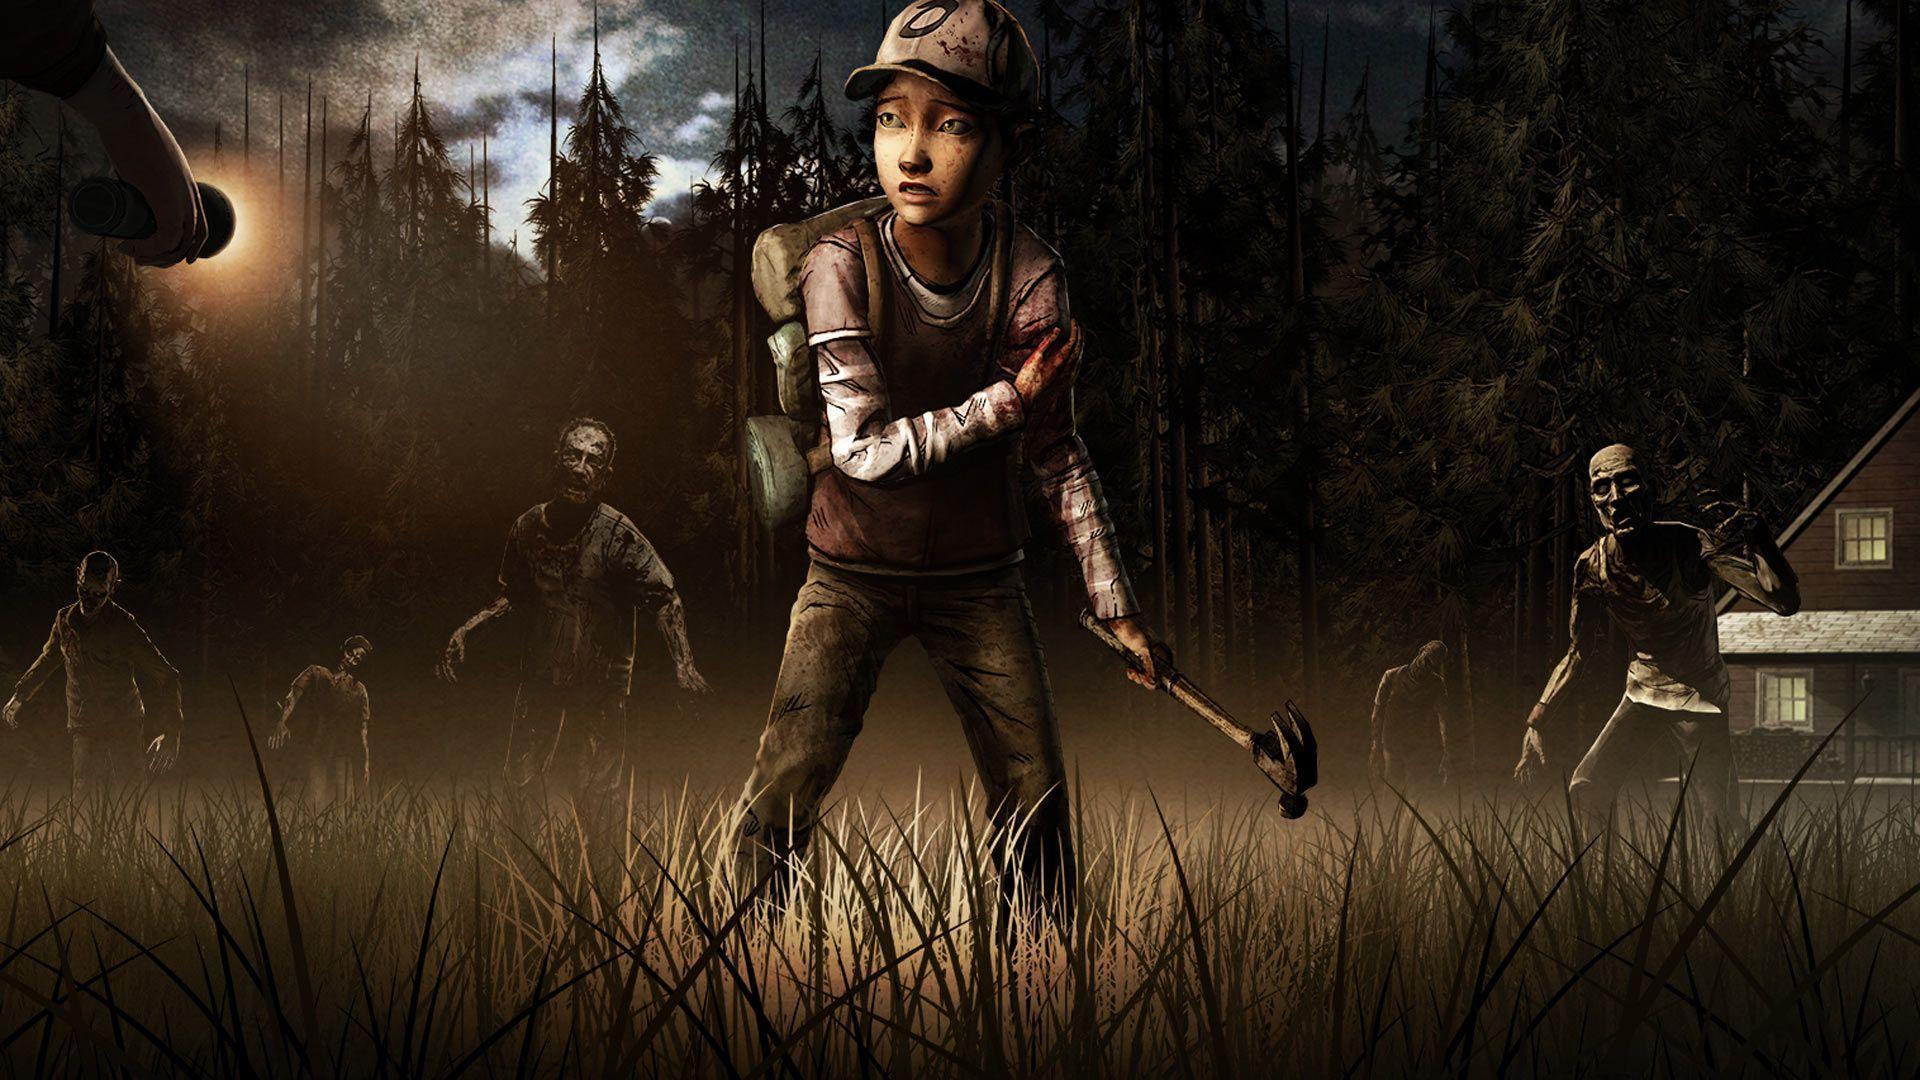 Video Game The Walking Dead: Season One Wallpaper 1920x1080 px